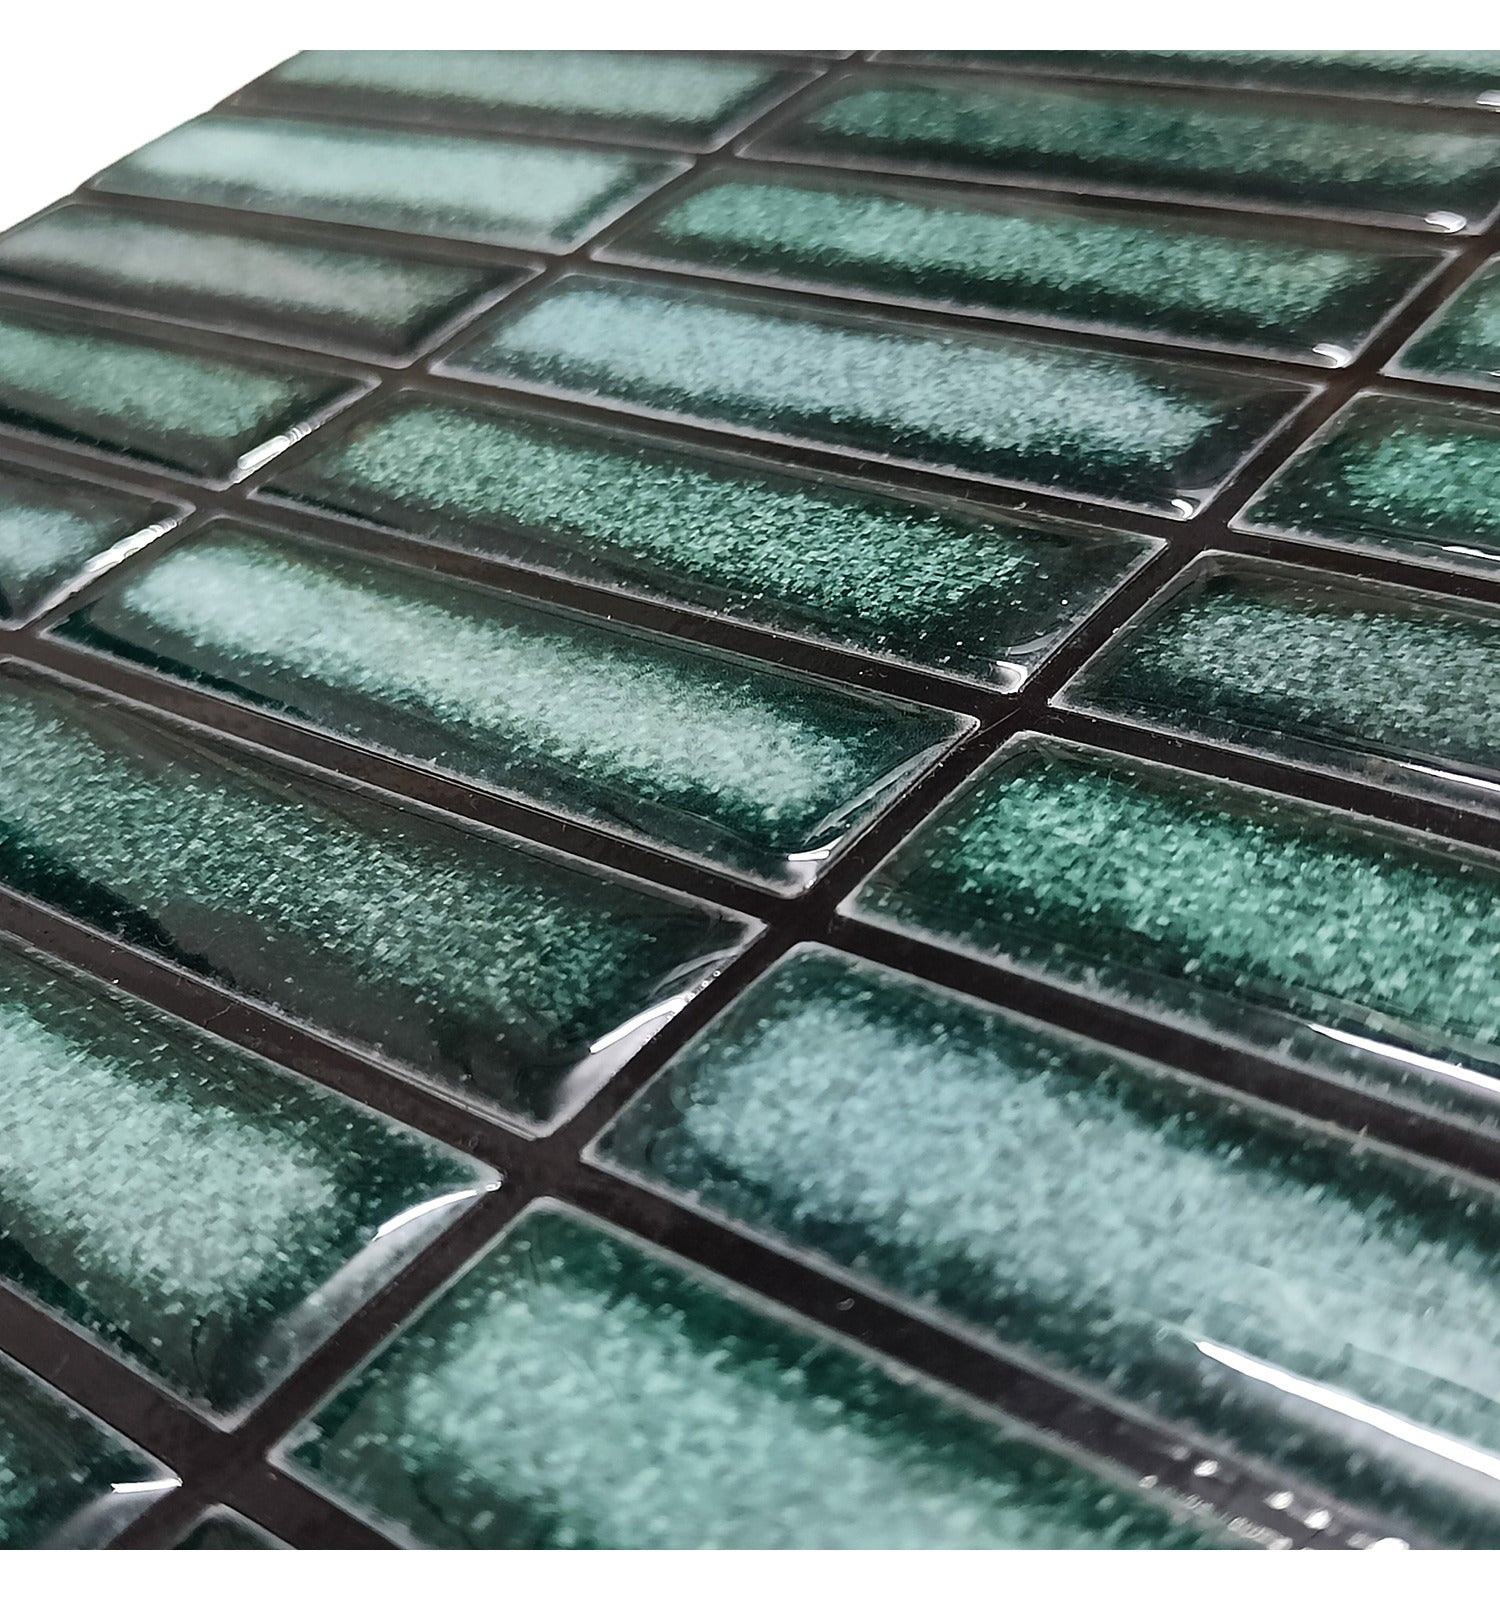 KitKat Teal Blue Tiles | 3D Mosaic Peel and Stick Wall Tile | Peel and Stick Backsplash Kitchen Tiles